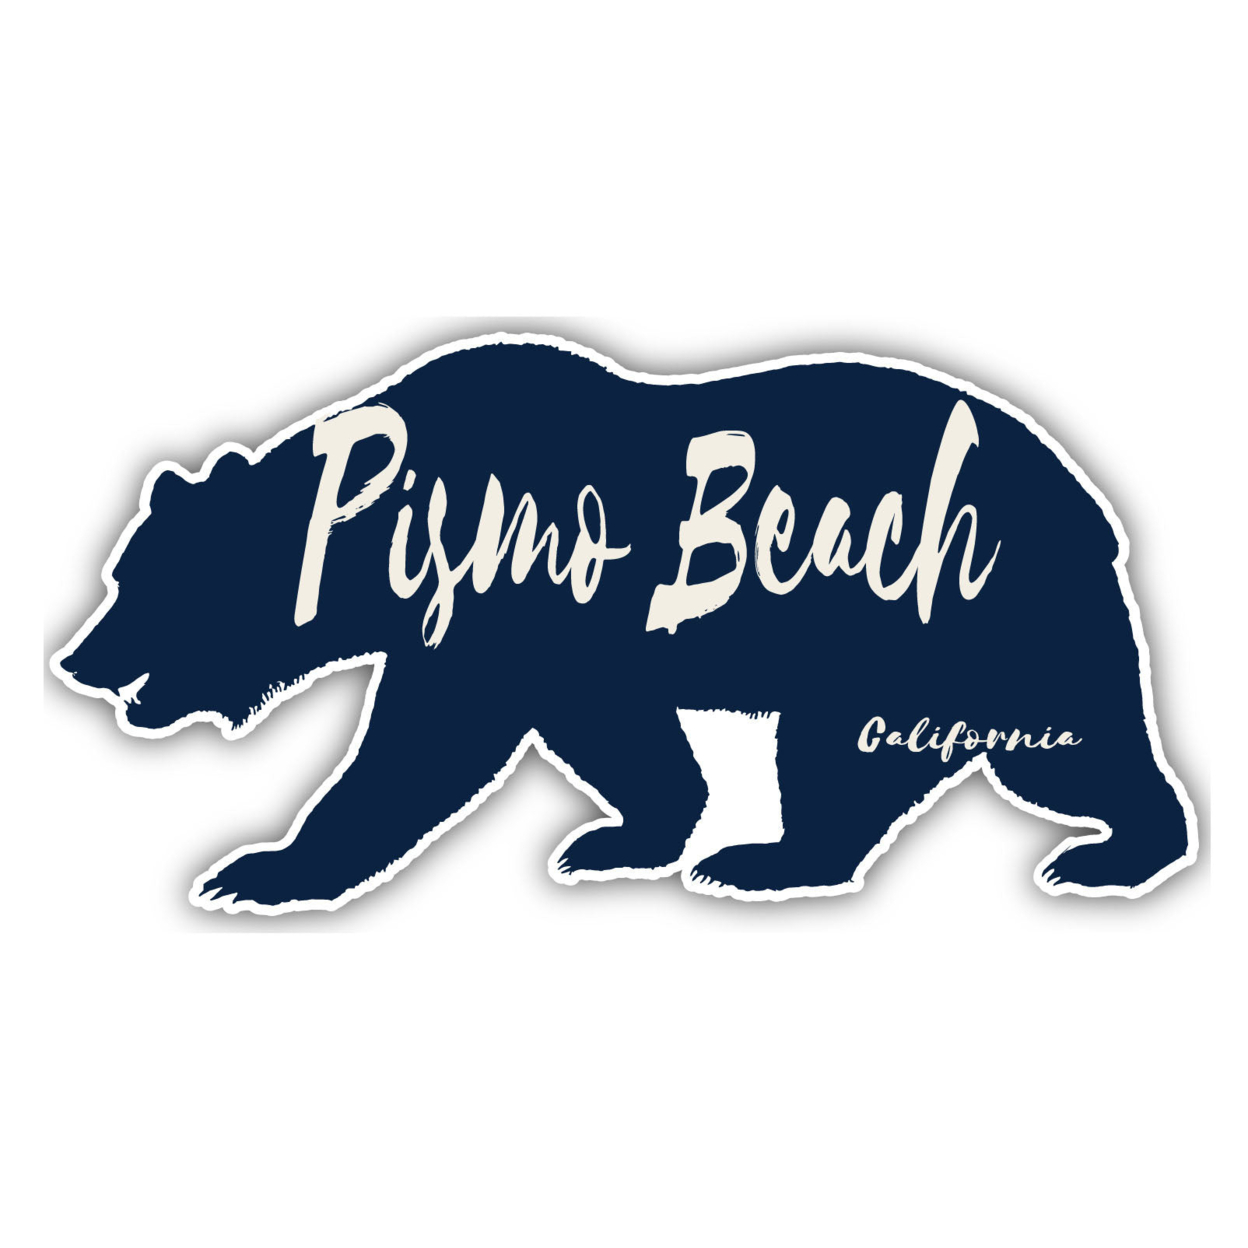 Pismo Beach California Souvenir Decorative Stickers (Choose Theme And Size) - Single Unit, 4-Inch, Tent